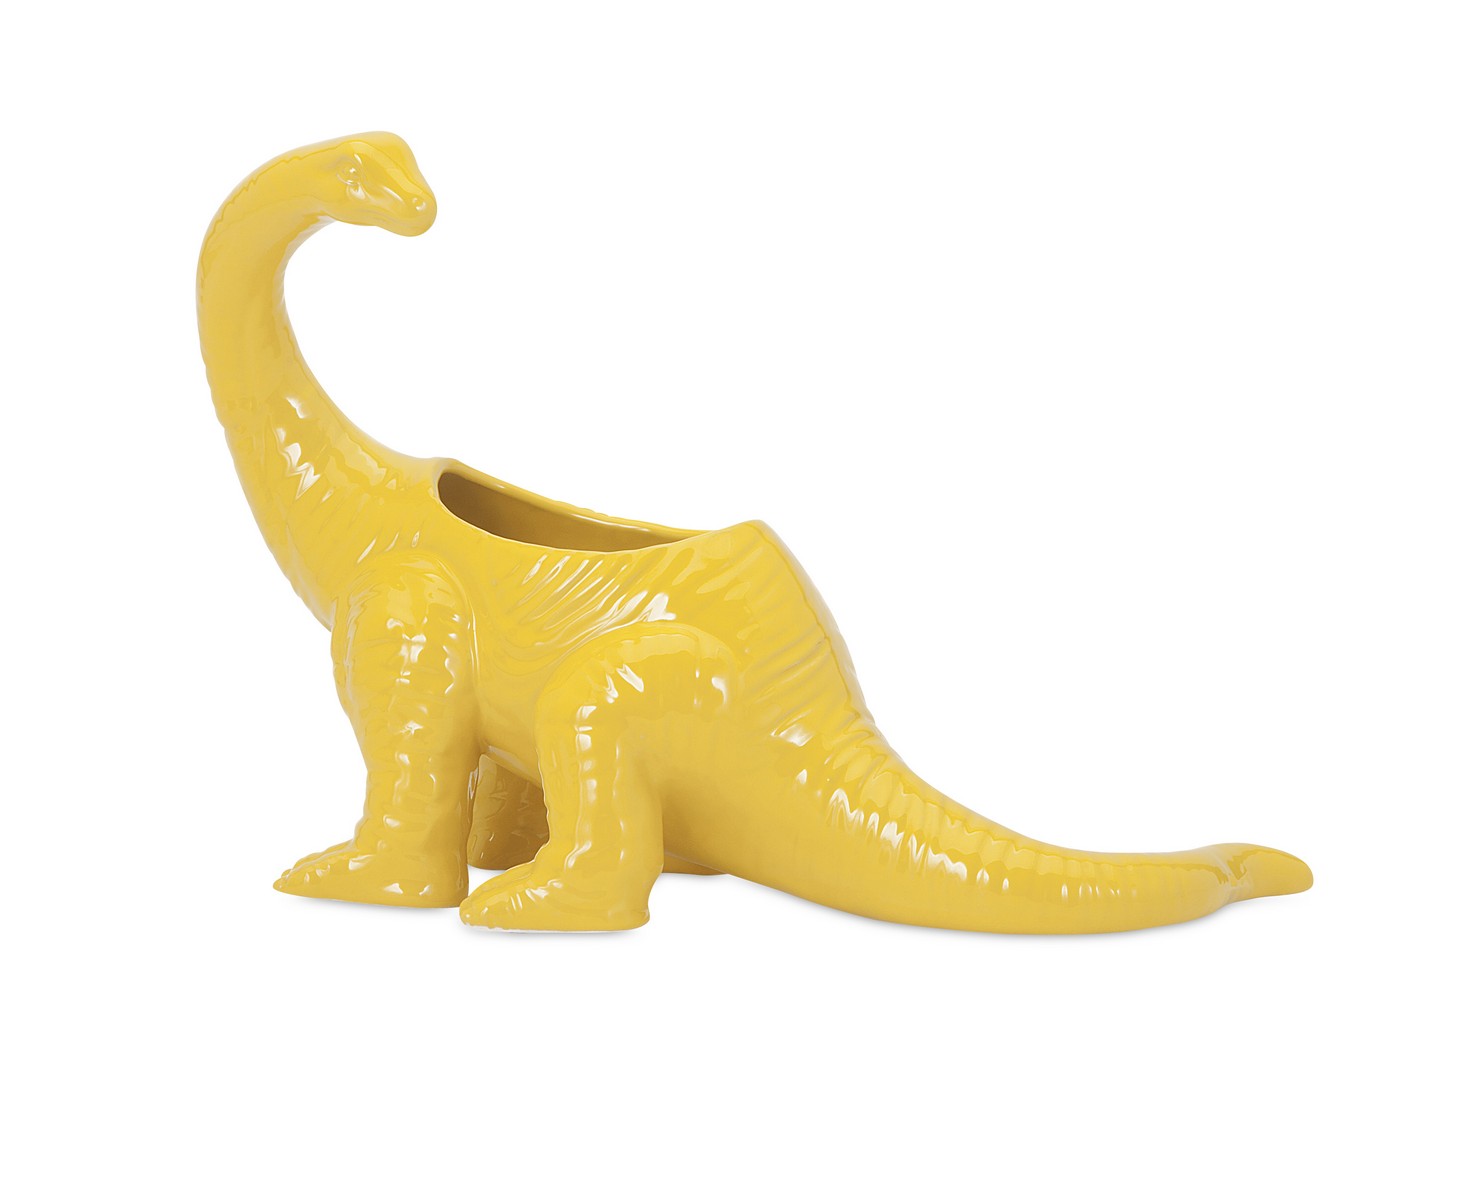 IMAX Dinosaur Yellow Ceramic Planter